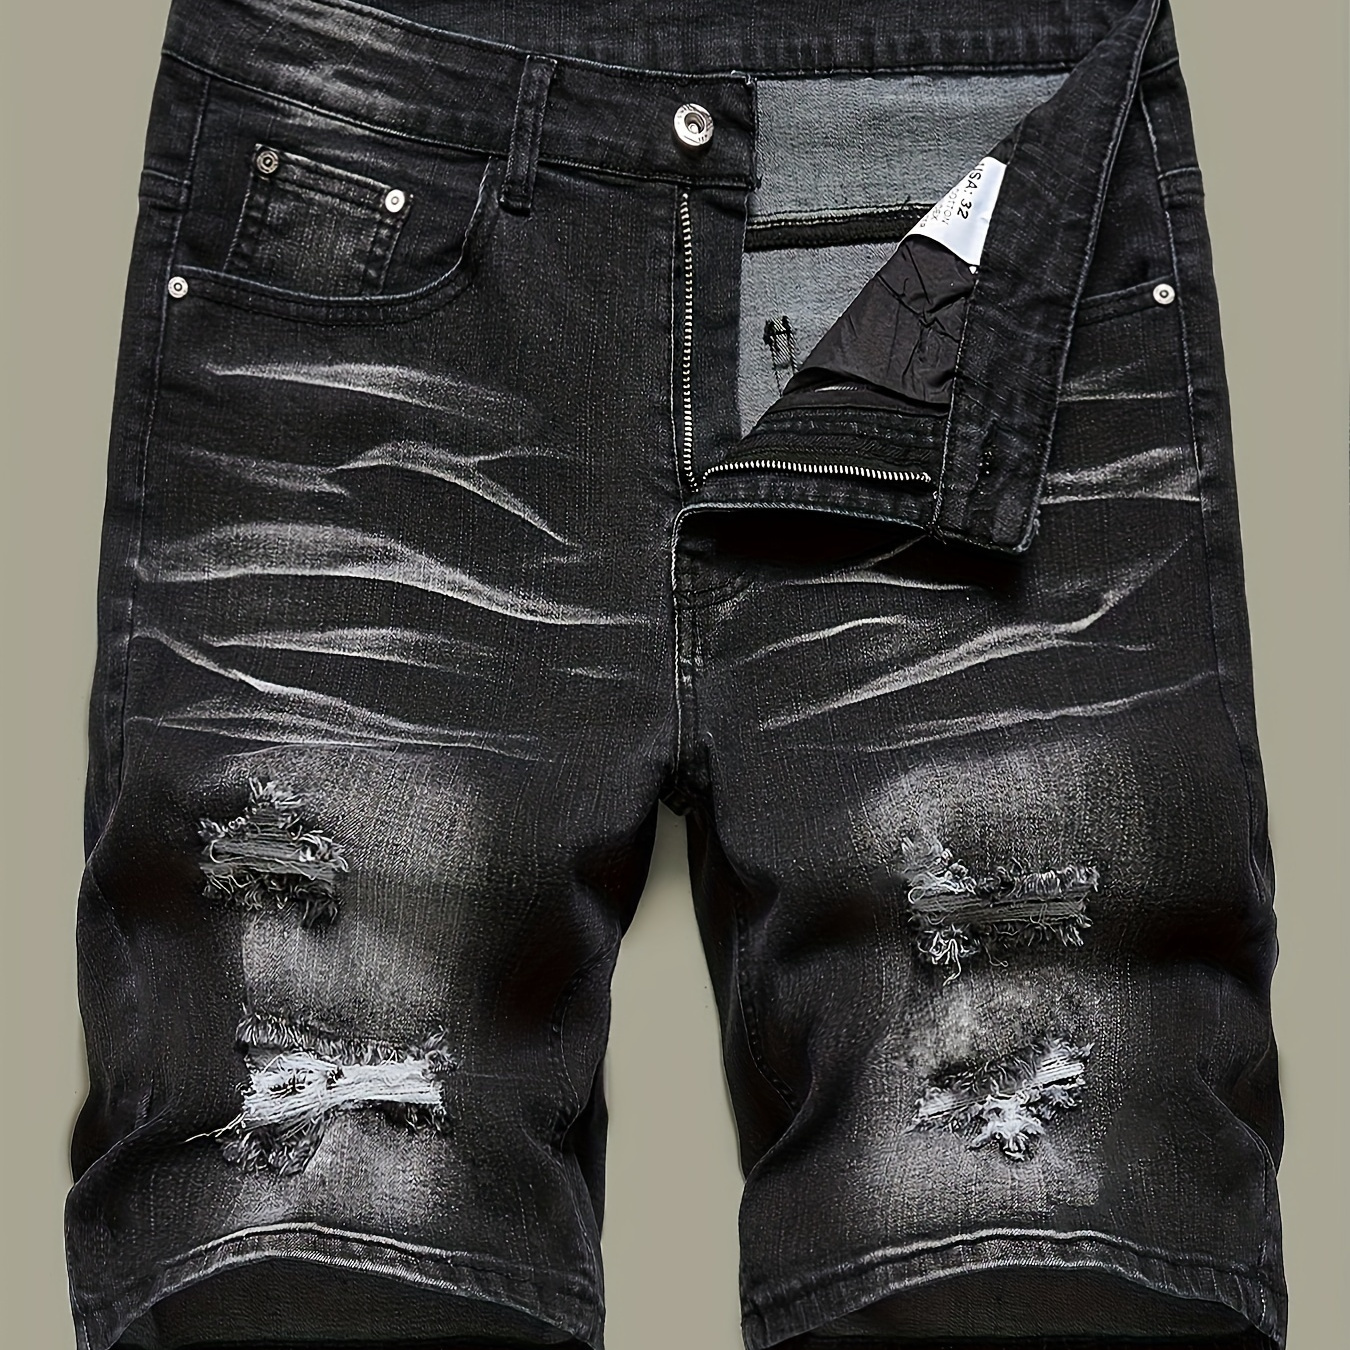 

Men's Casual Slim Fit Denim Shorts, Distressed Ripped Design, Stretchable Regular Black Jeans, Summer Fashion, Bermuda Shorts